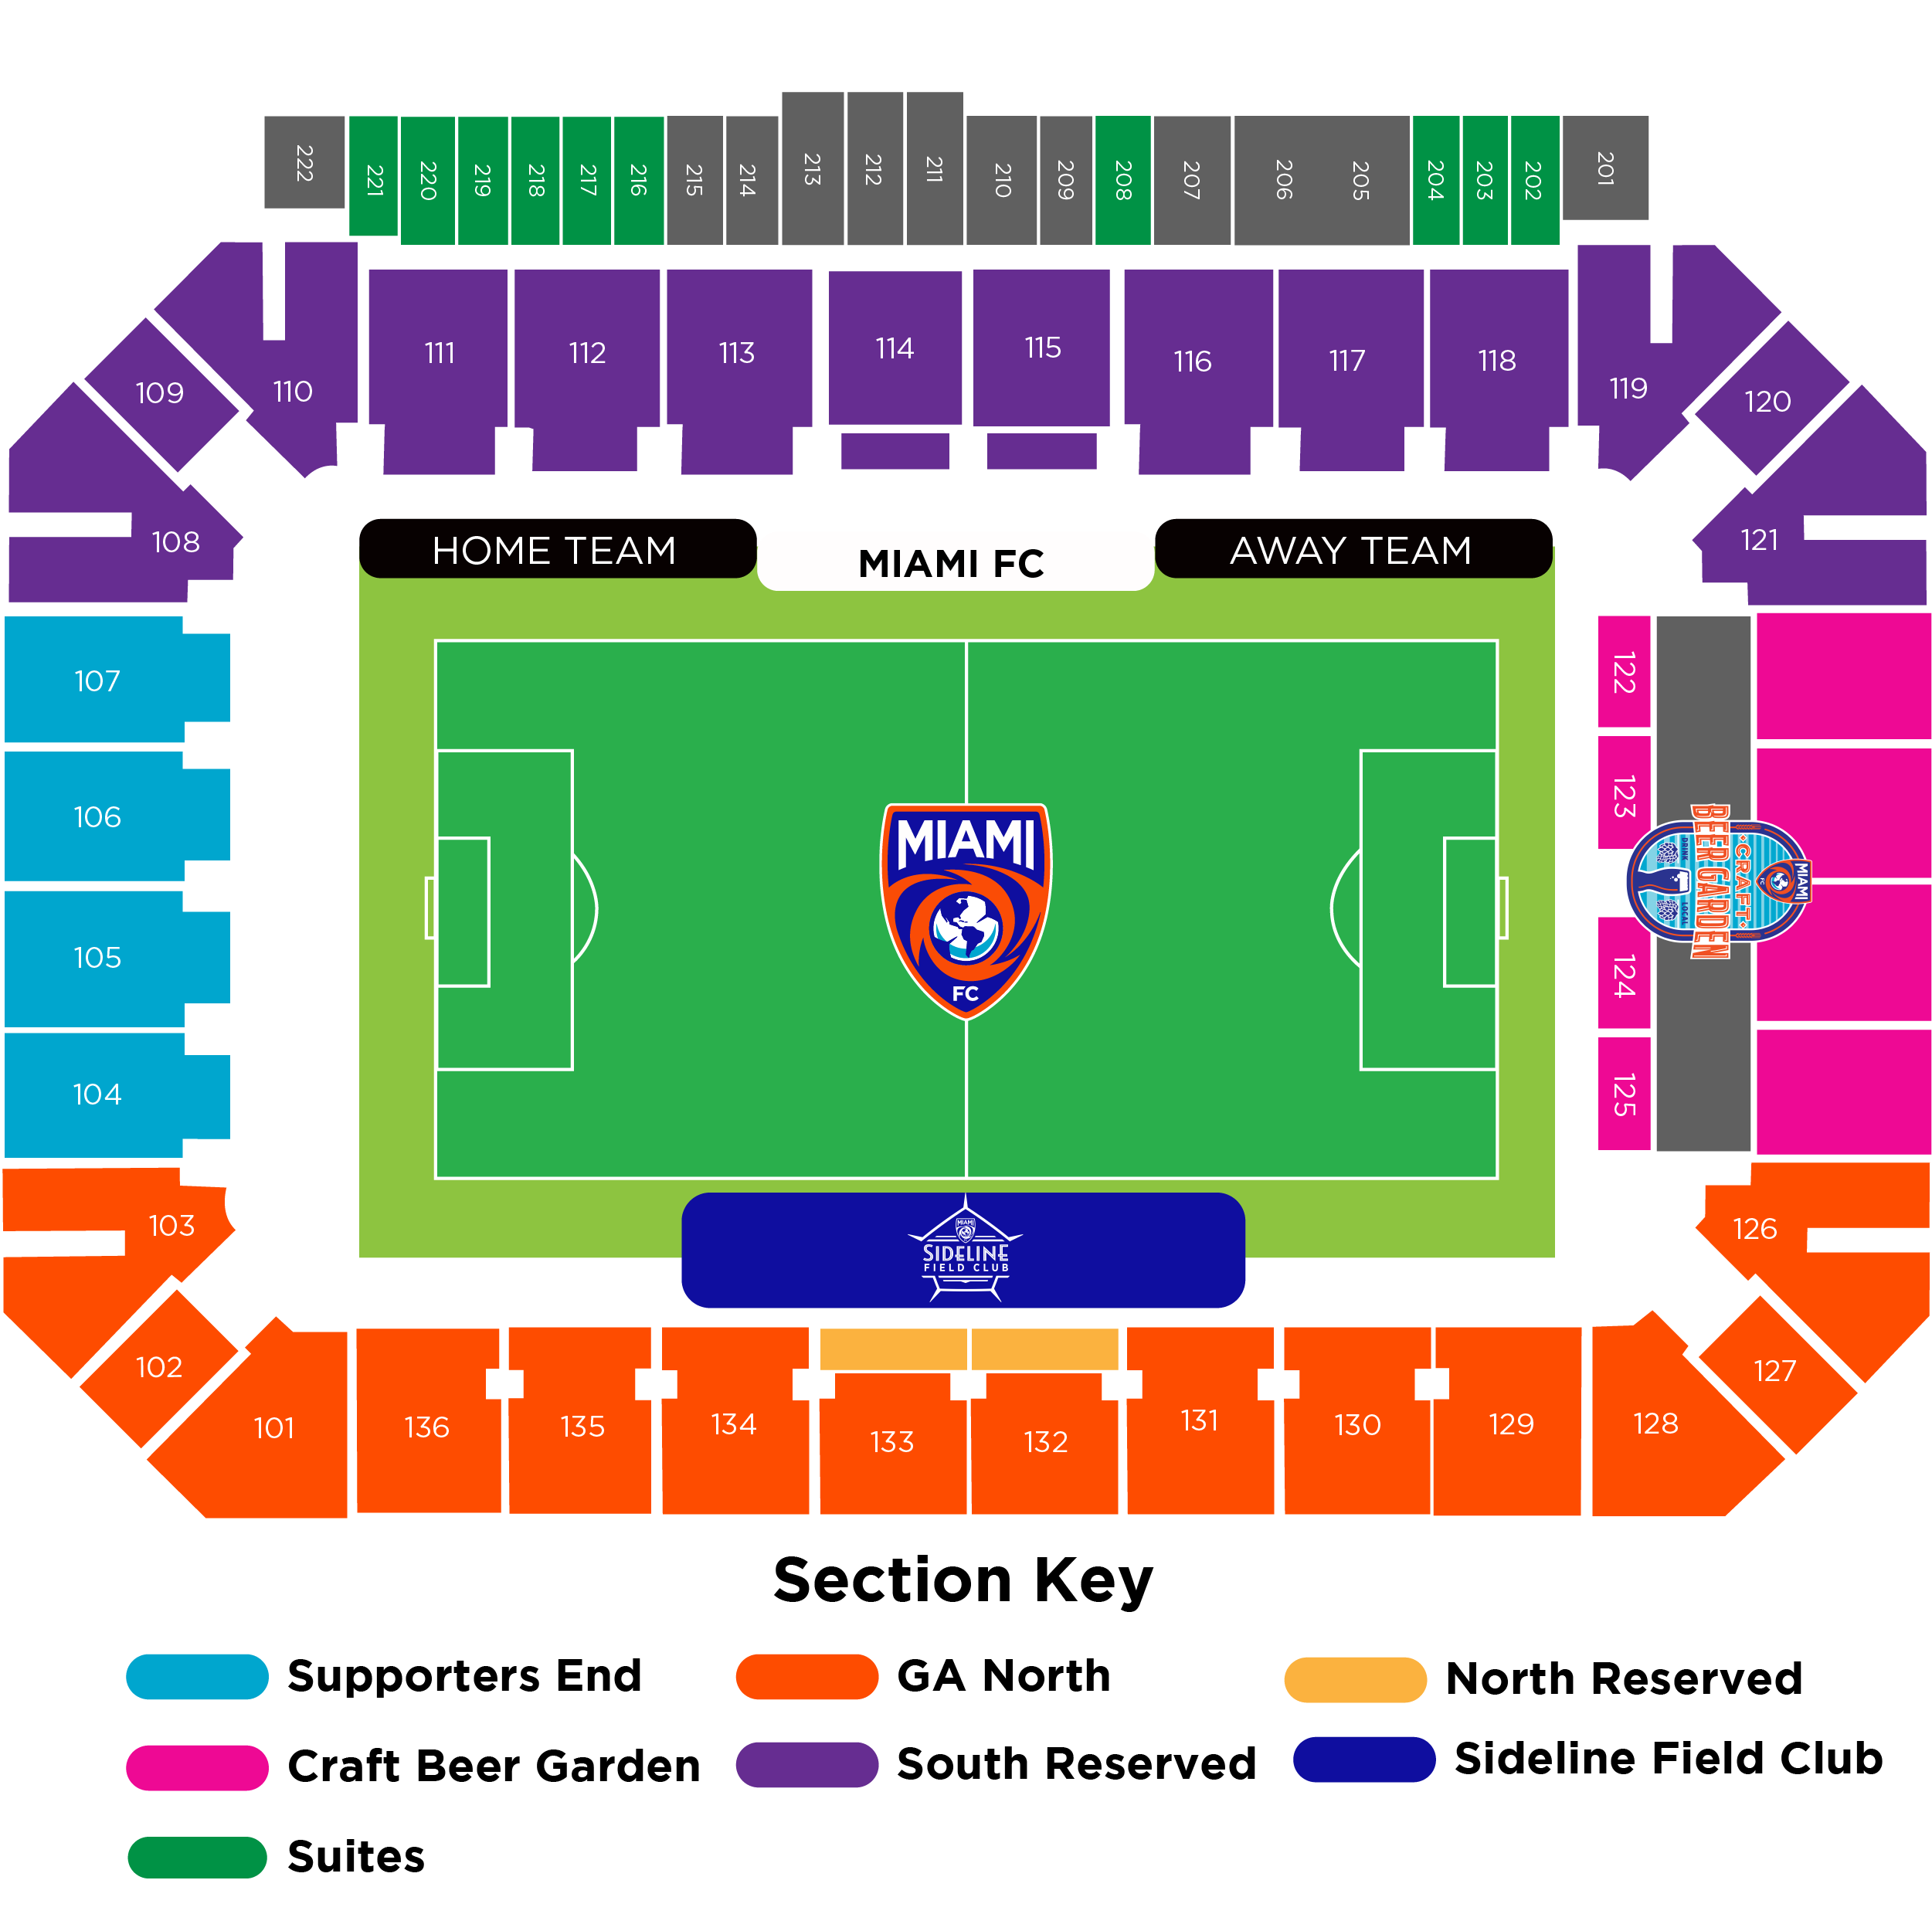 Fiu Football Stadium Seating Chart